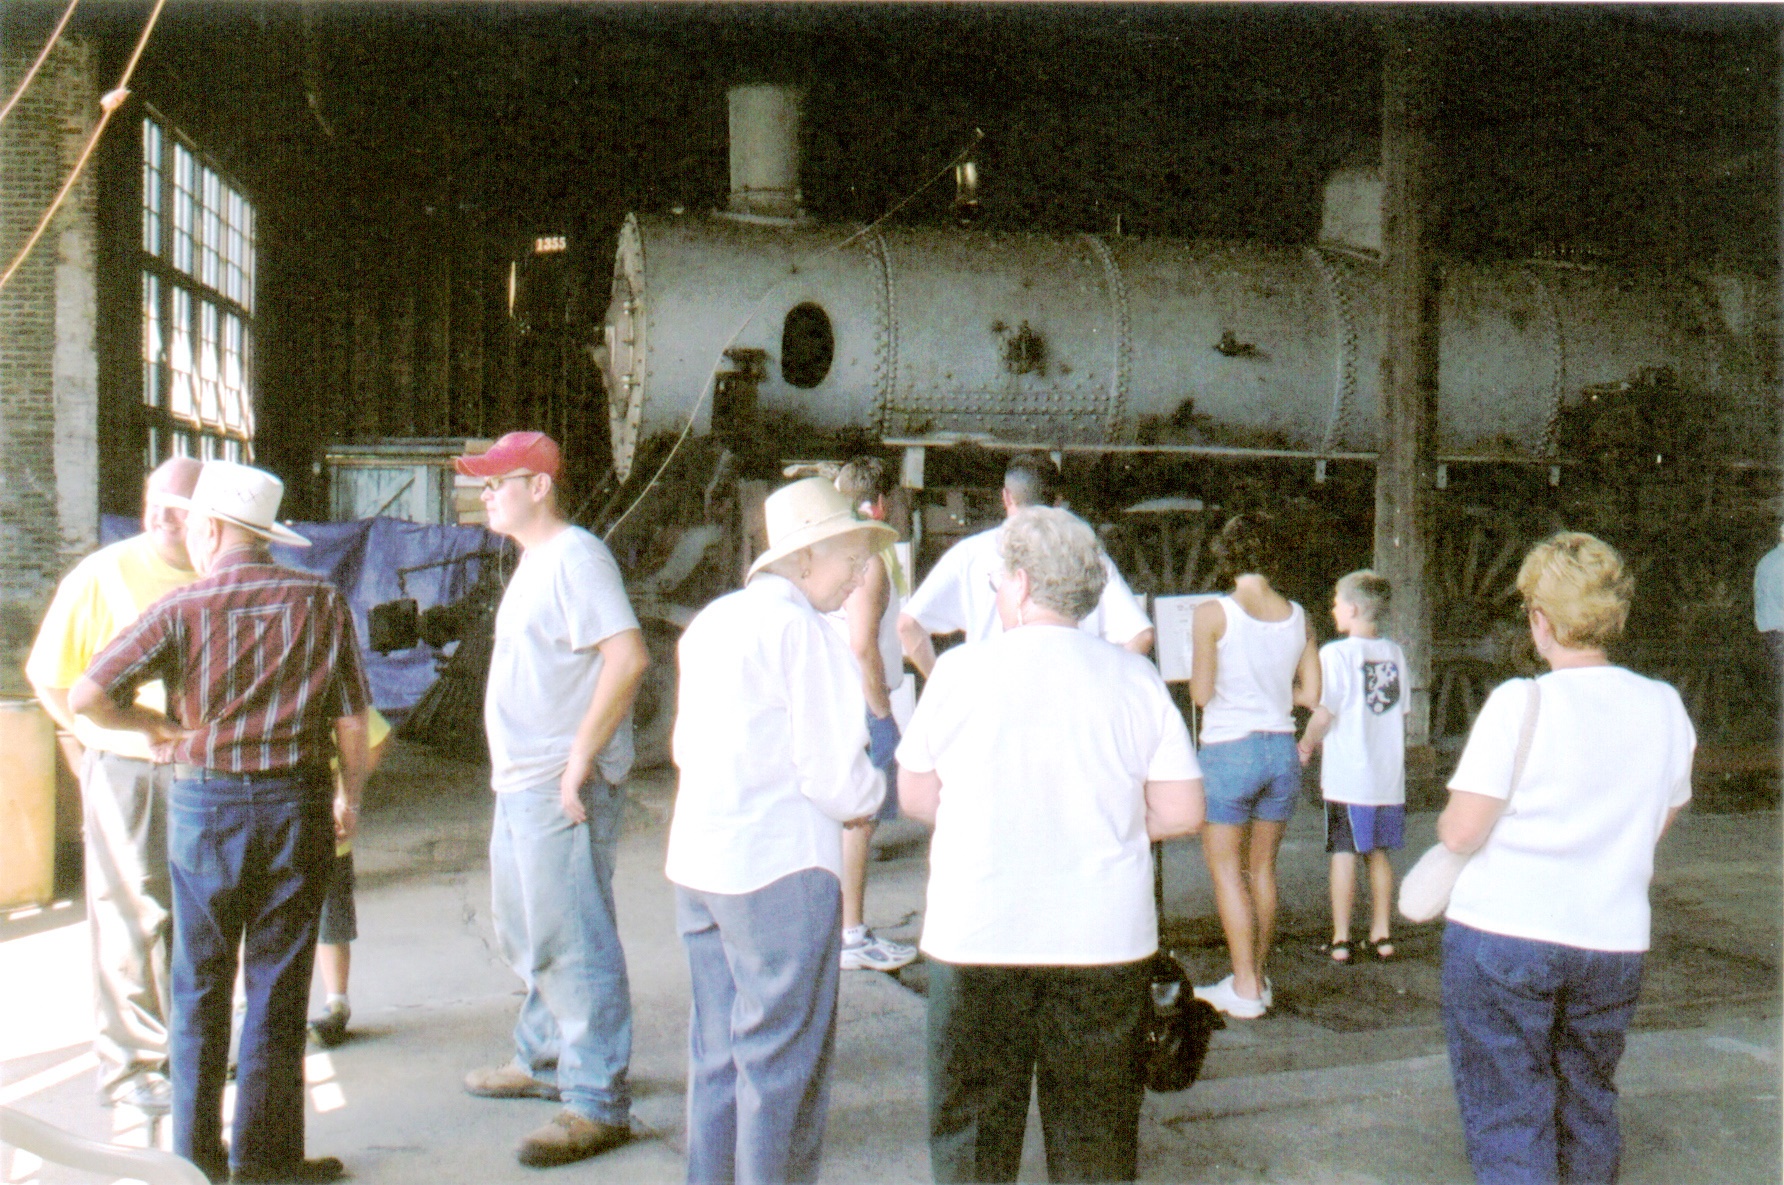 restored locomotive at the Ag-Rail Festival